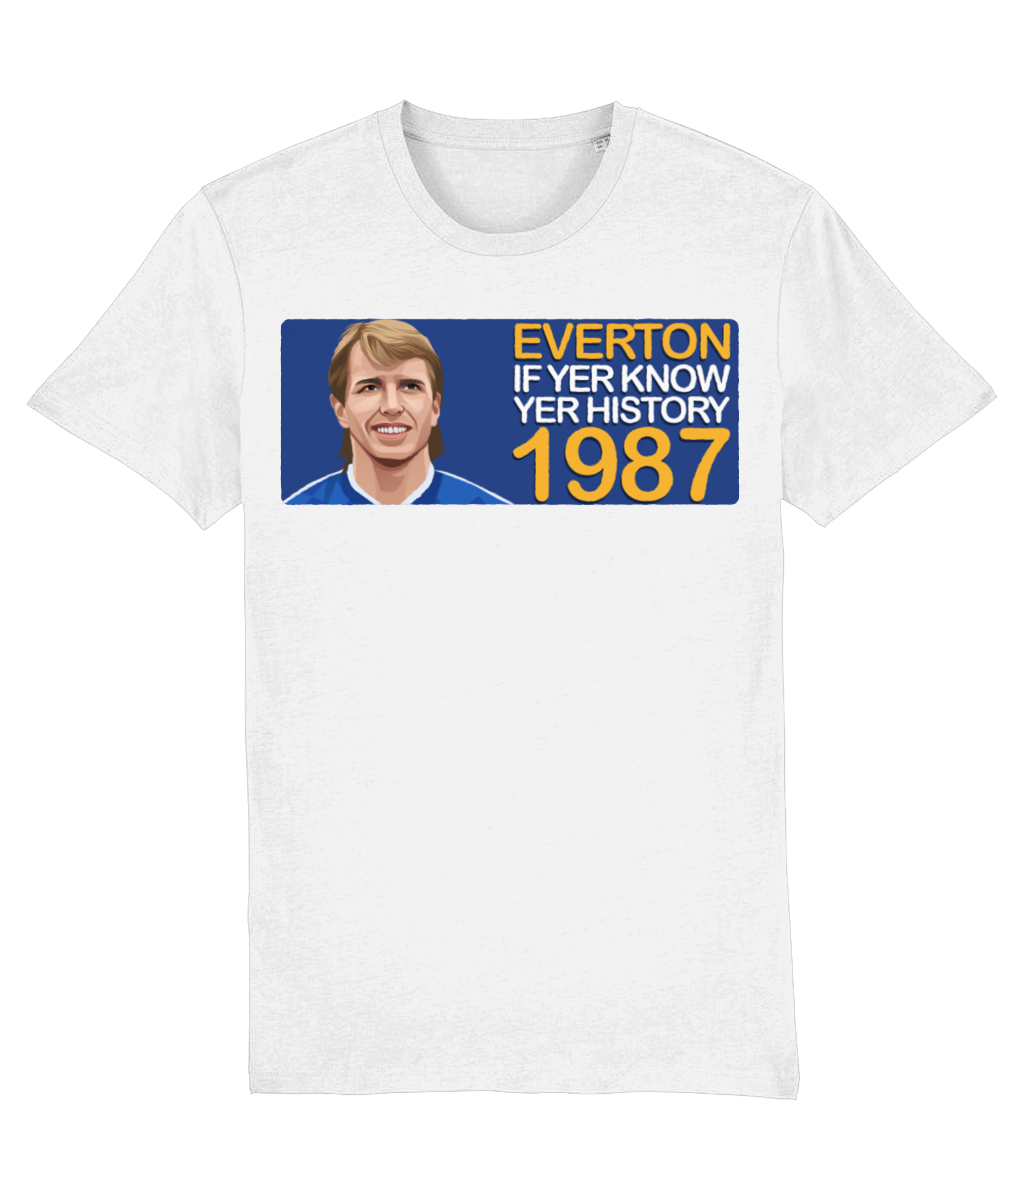 Everton 1987 Trevor Steven If Yer Know Yer History Unisex T-Shirt Stanley/Stella Retrotext White XX-Small 